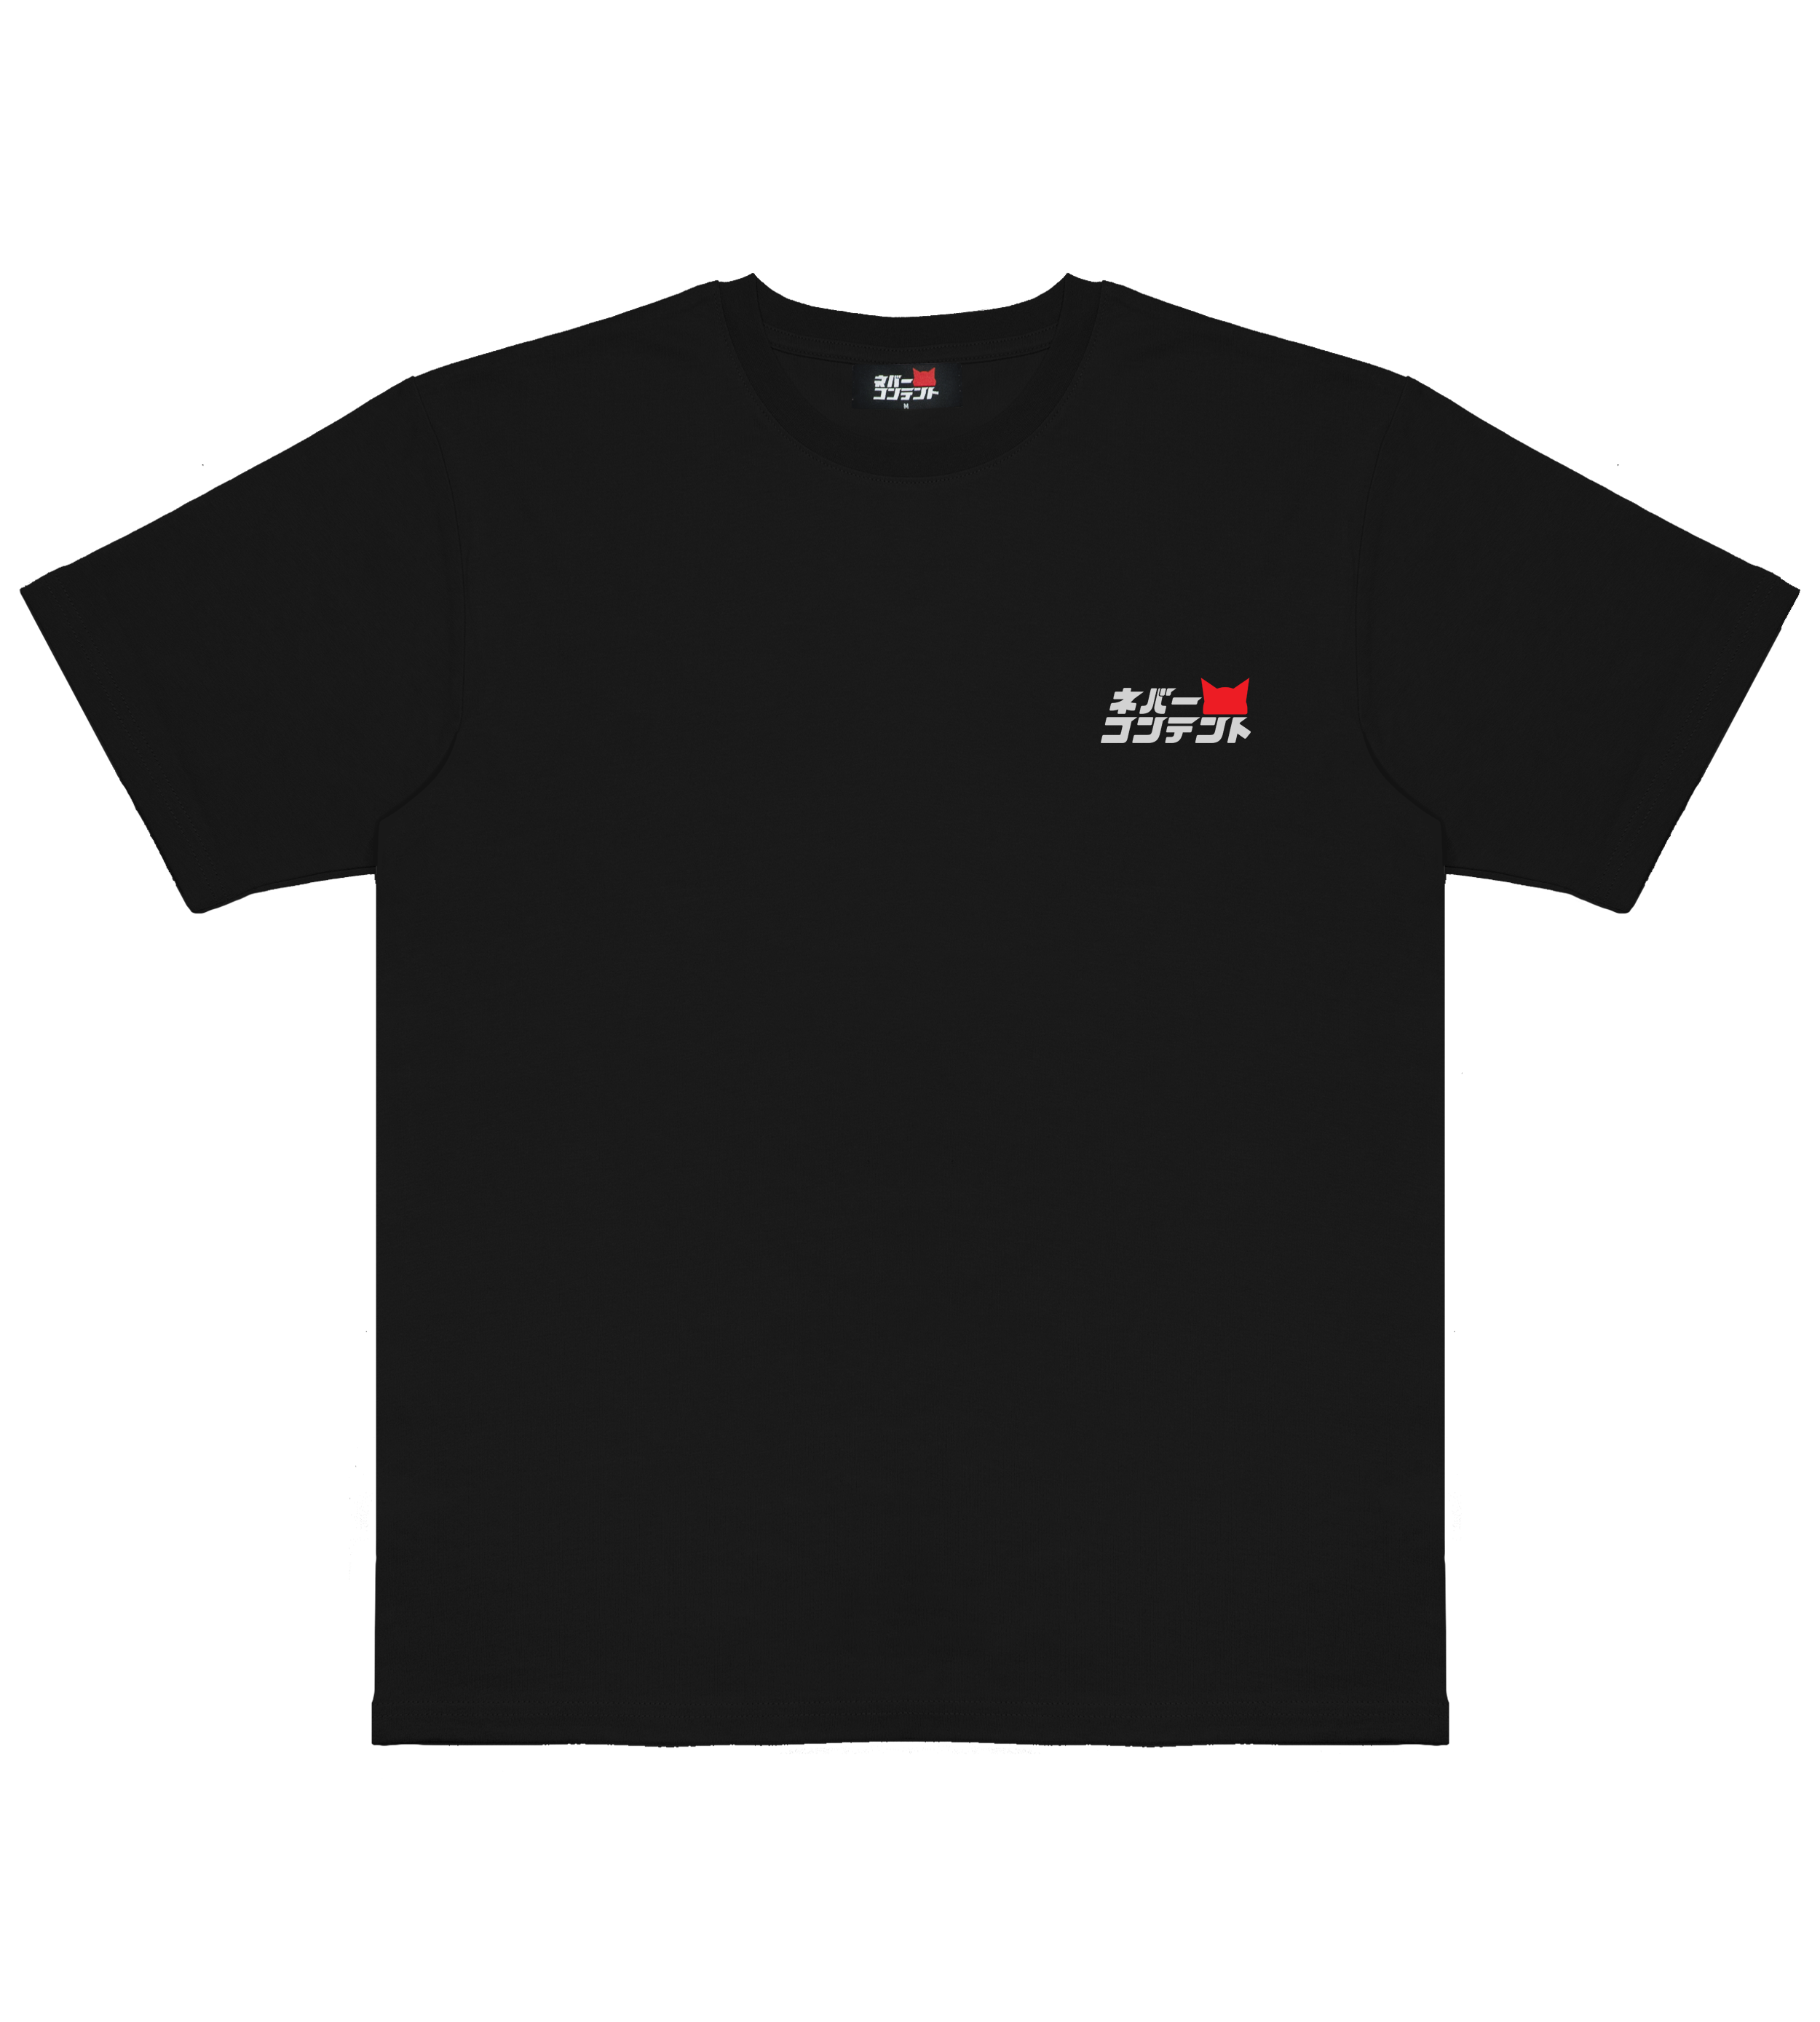 CSB swift - Black Shirt